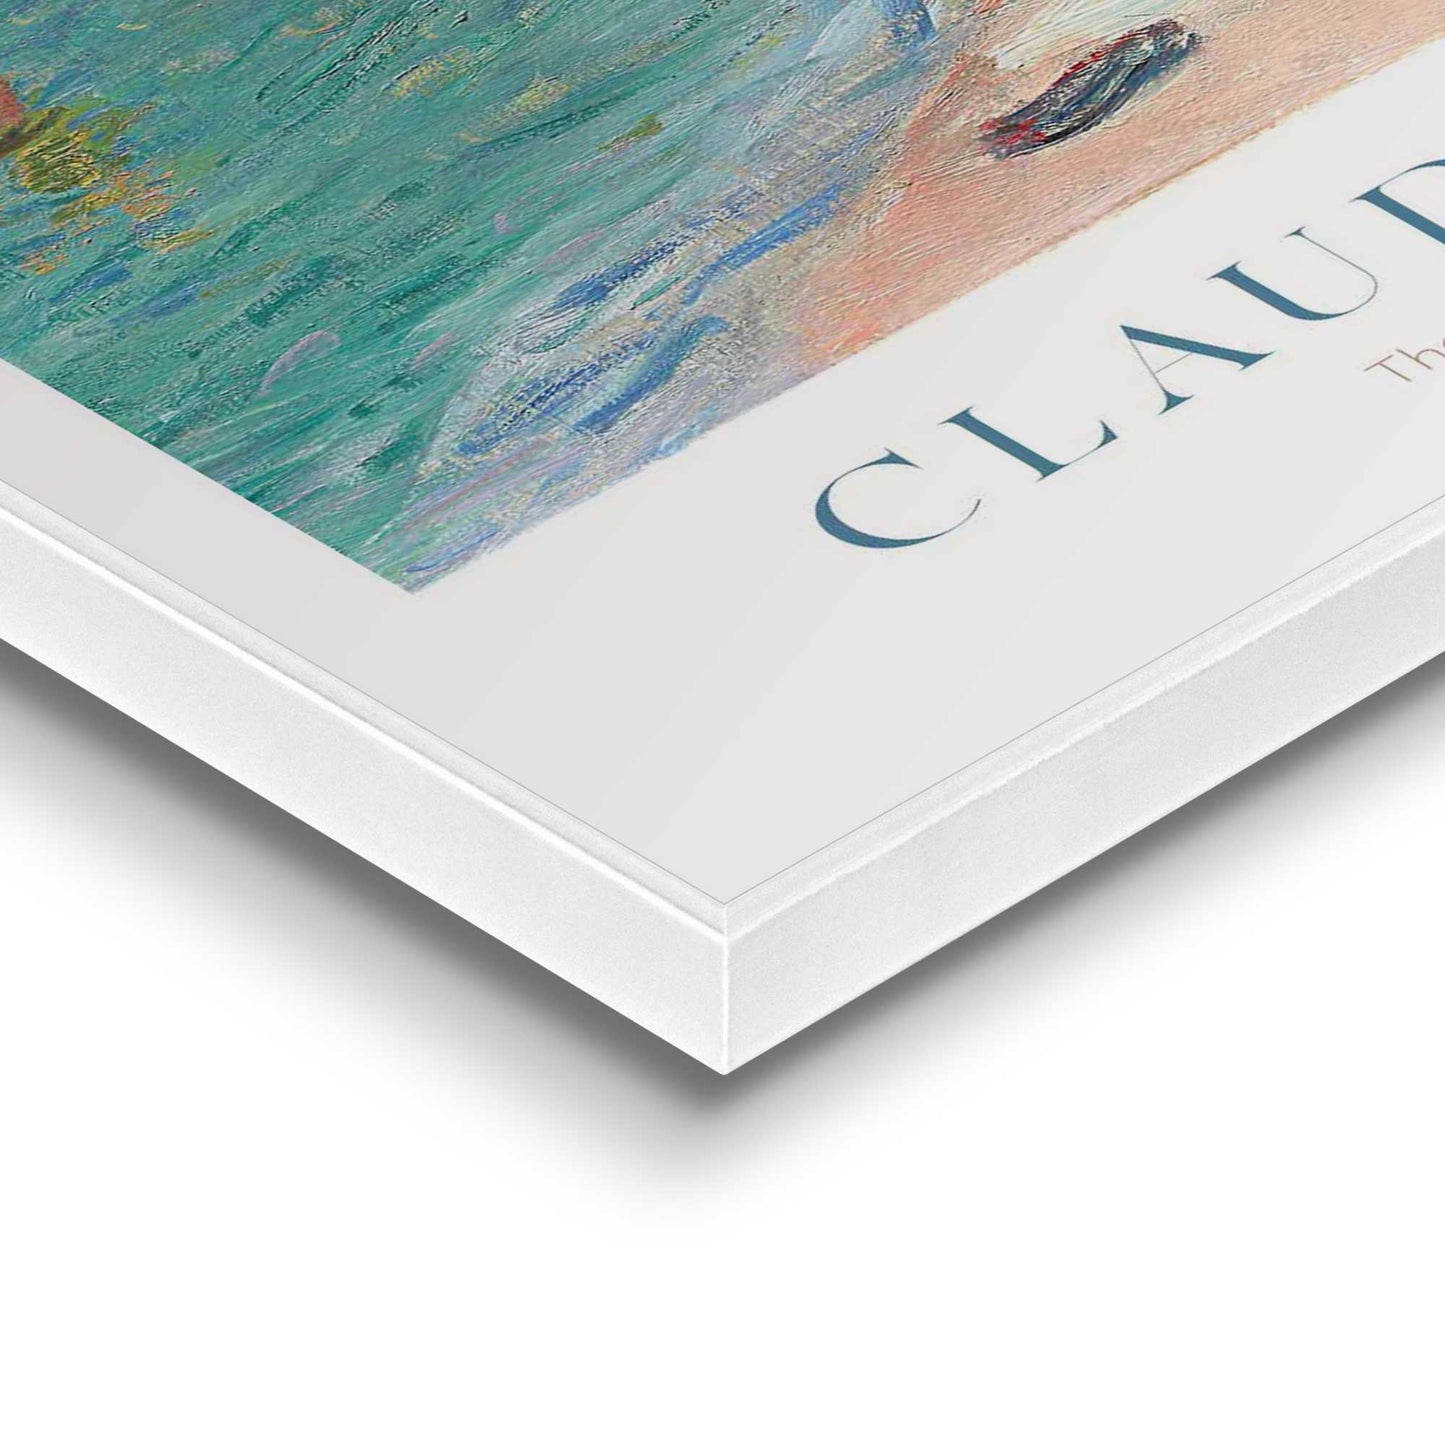 Framed in White Claude Monet - Etretat beach 70x50